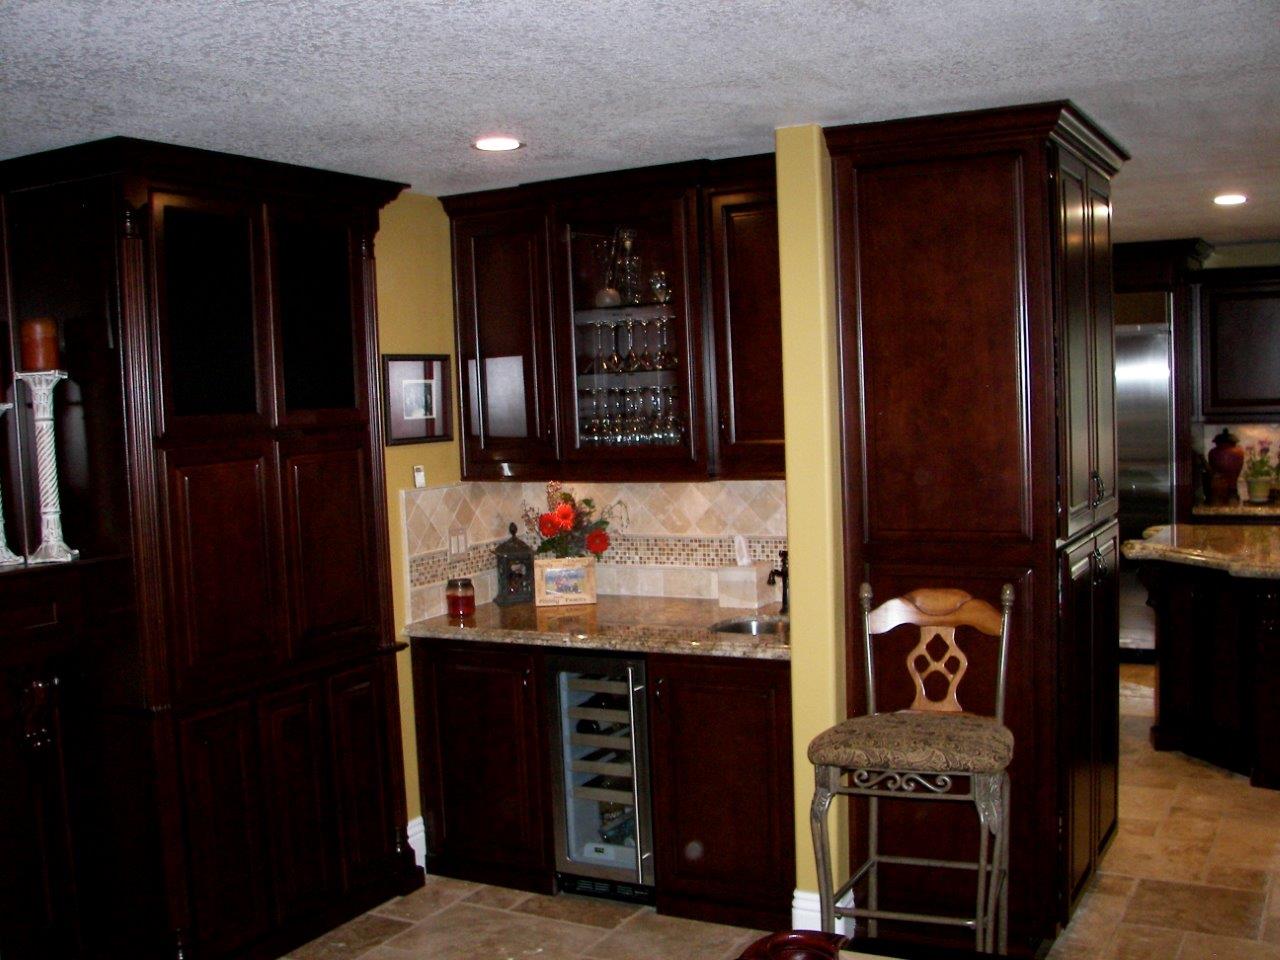 Kitchen Cabinets In Orange County 9 